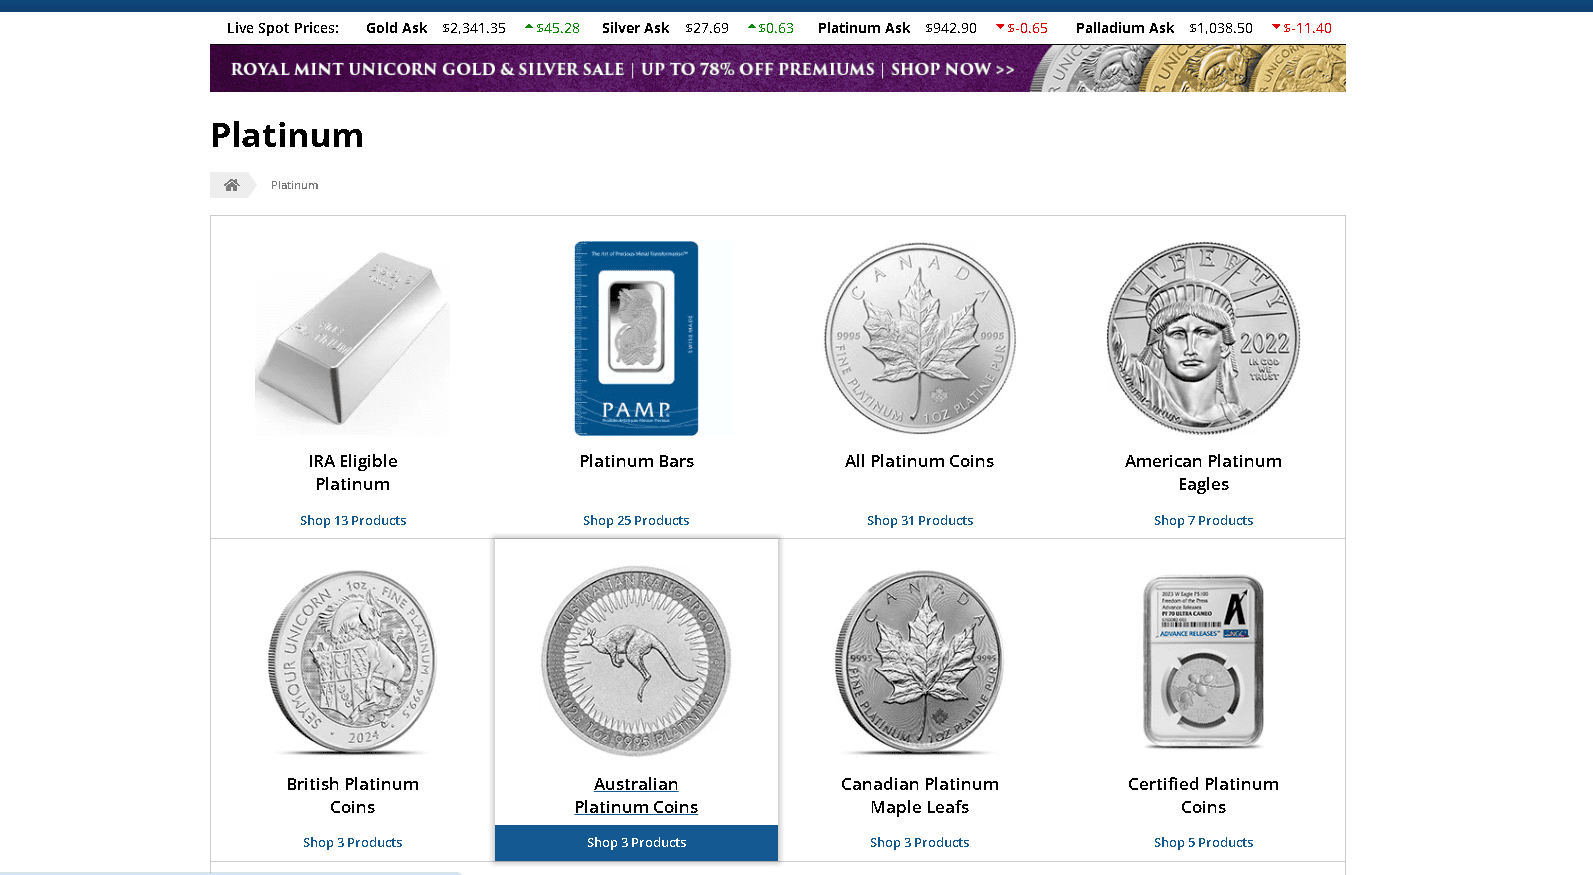 JM Bullion don't sell fake platinum coins and bars. They sell real platinum bullion.